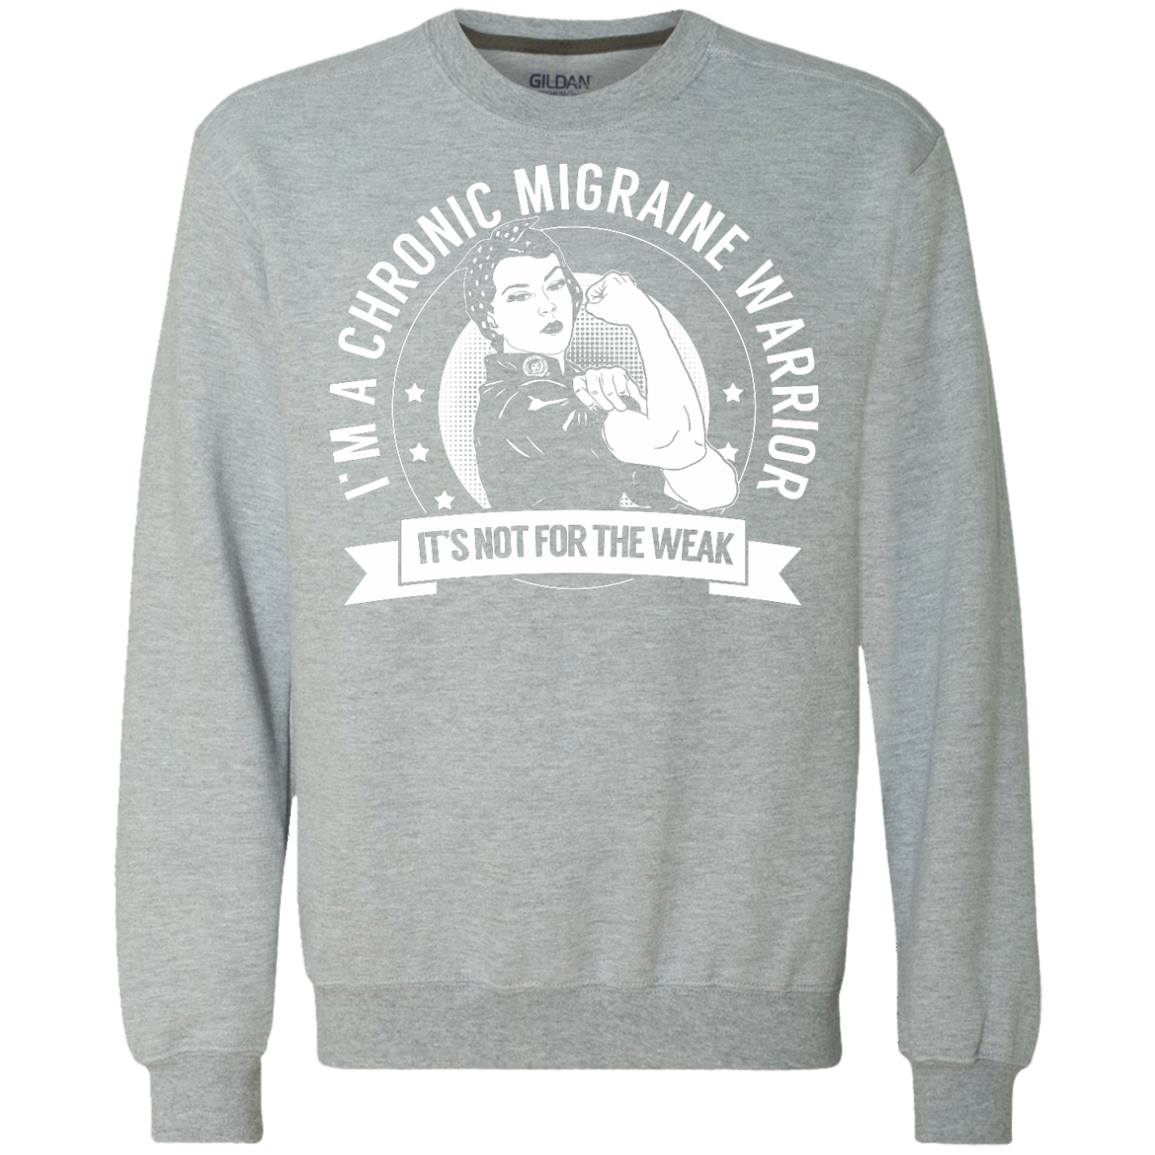 Chronic Migraine Warrior Not For The Weak Crewneck Sweatshirt 9 oz. - The Unchargeables